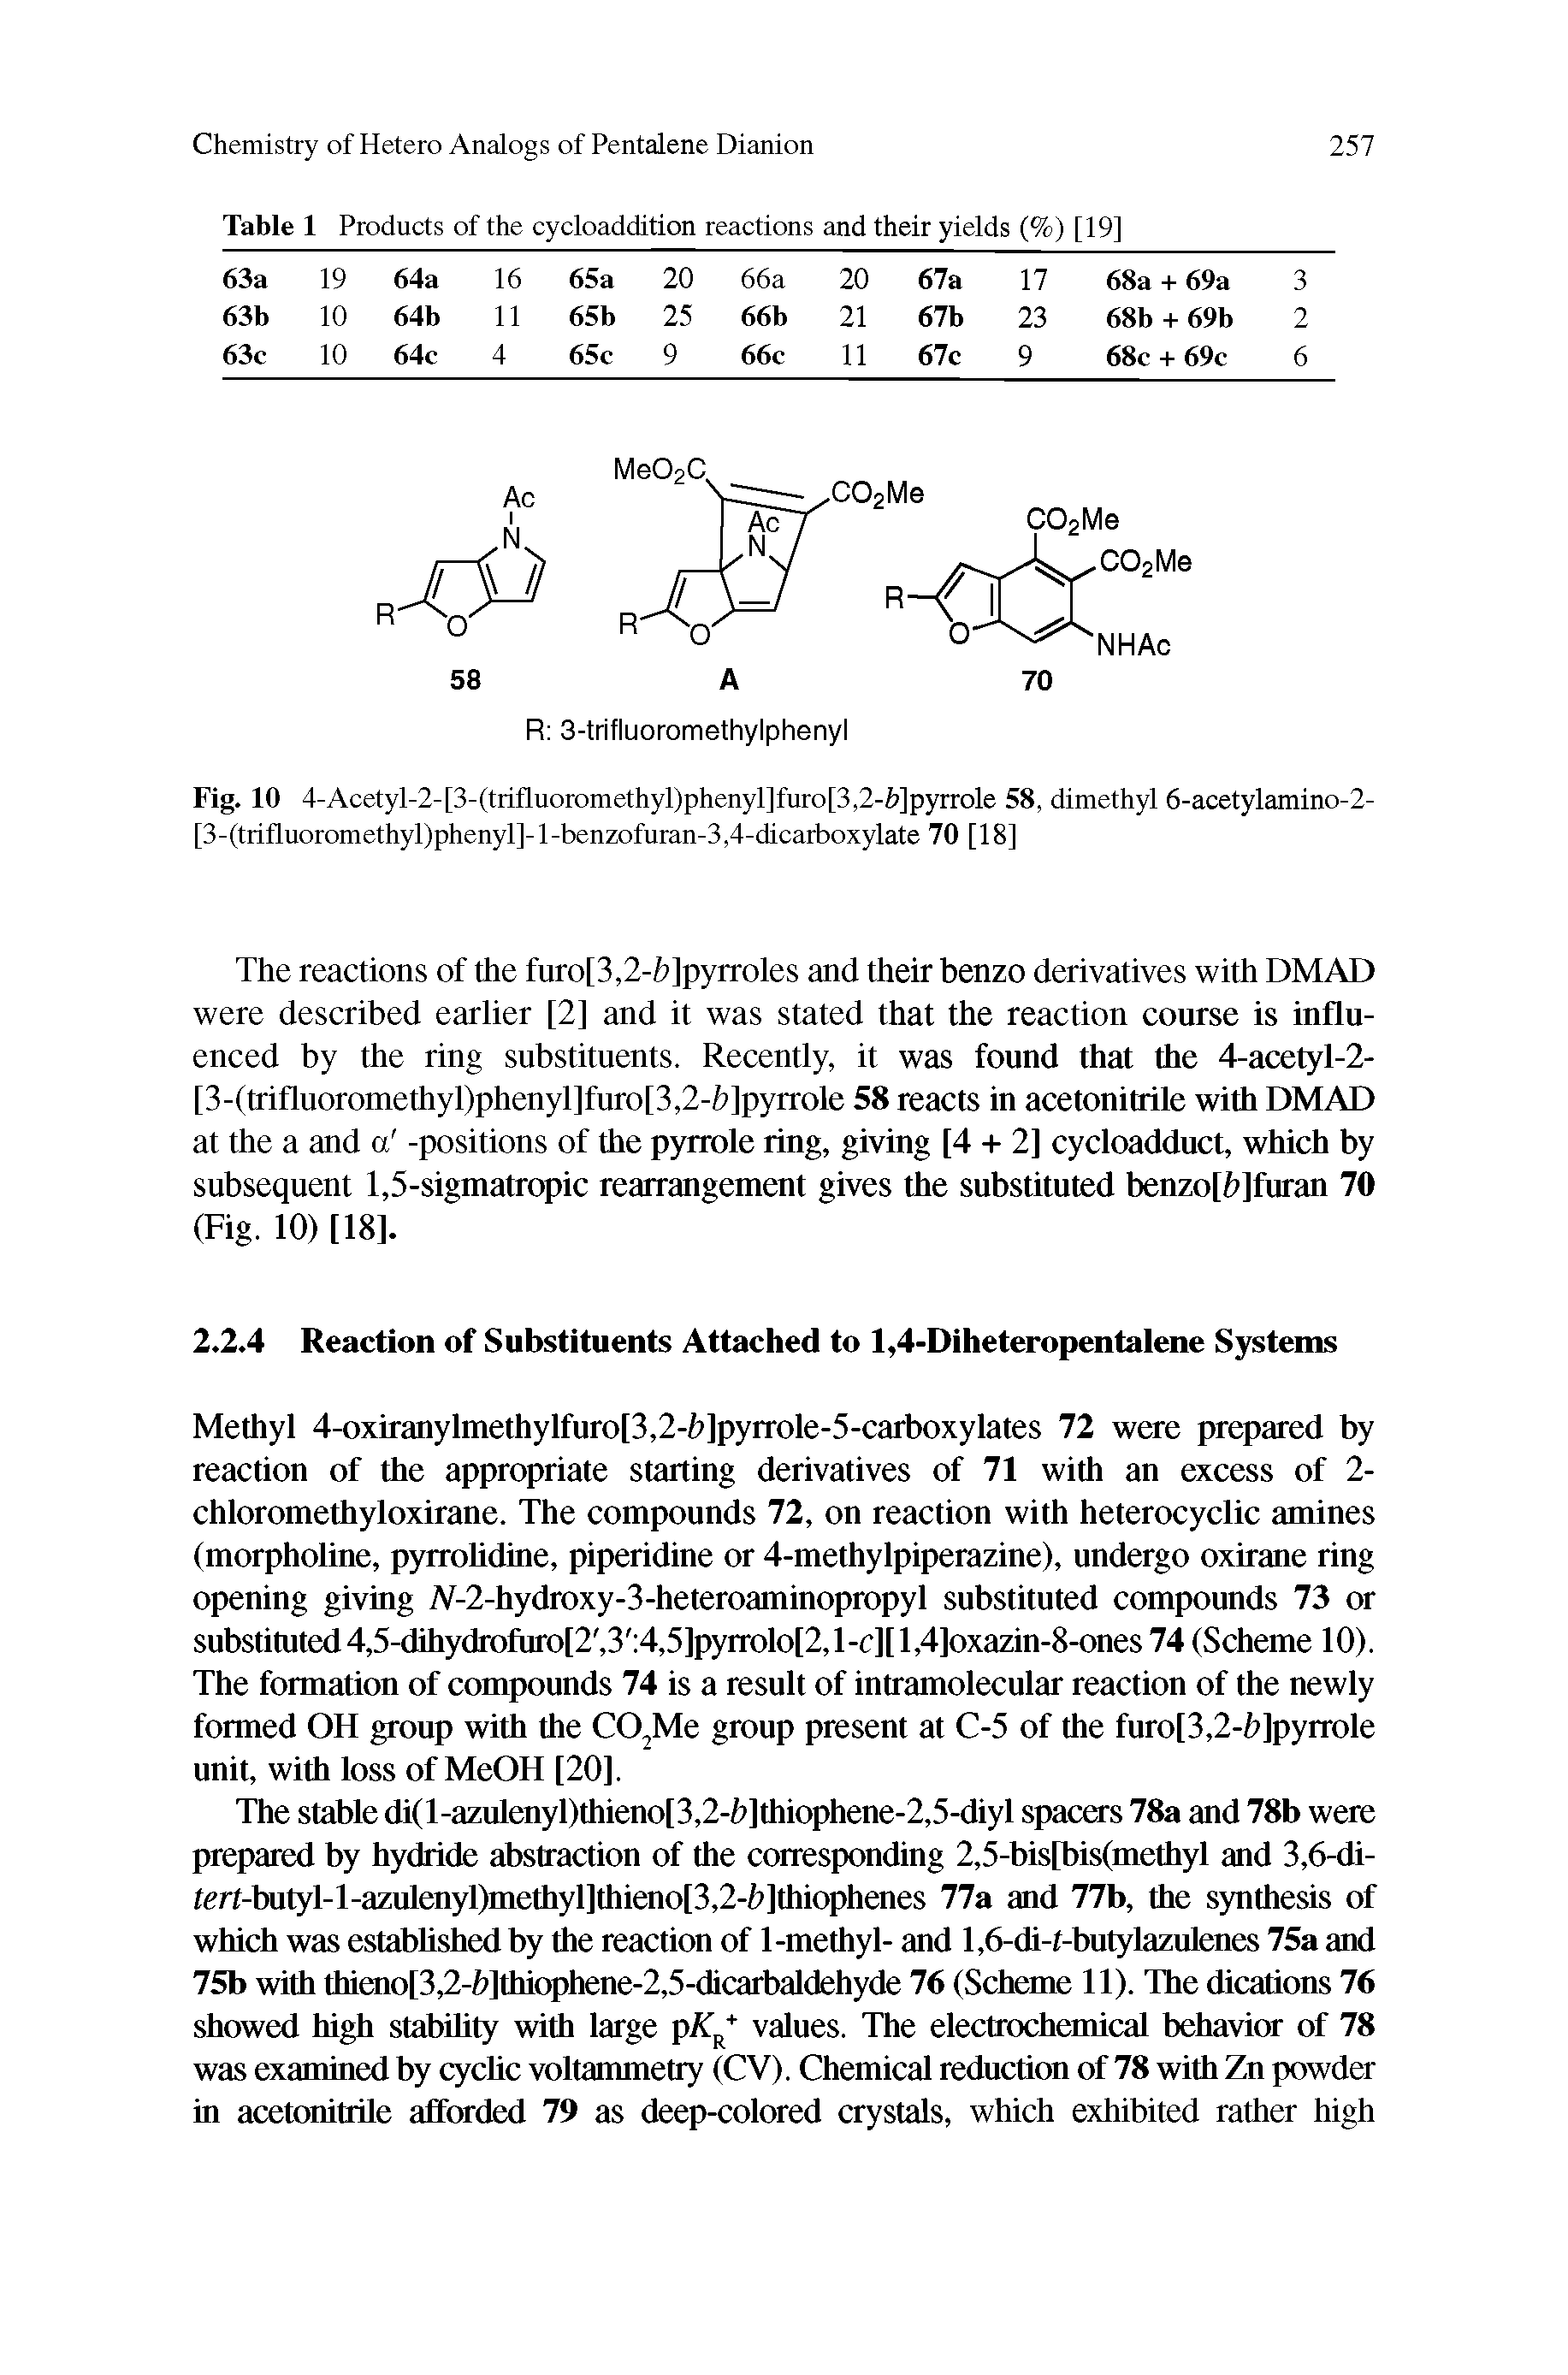 Fig. 10 4-Acetyl-2-[3-(trifluoromethyl)phenyl]furo[3,2-9]pyrrole 58, dimethyl 6-acetylamino-2-[3-(trifluoromethyl)phenyl]-l-benzofuran-3,4-dicarboxylate 70 [18]...